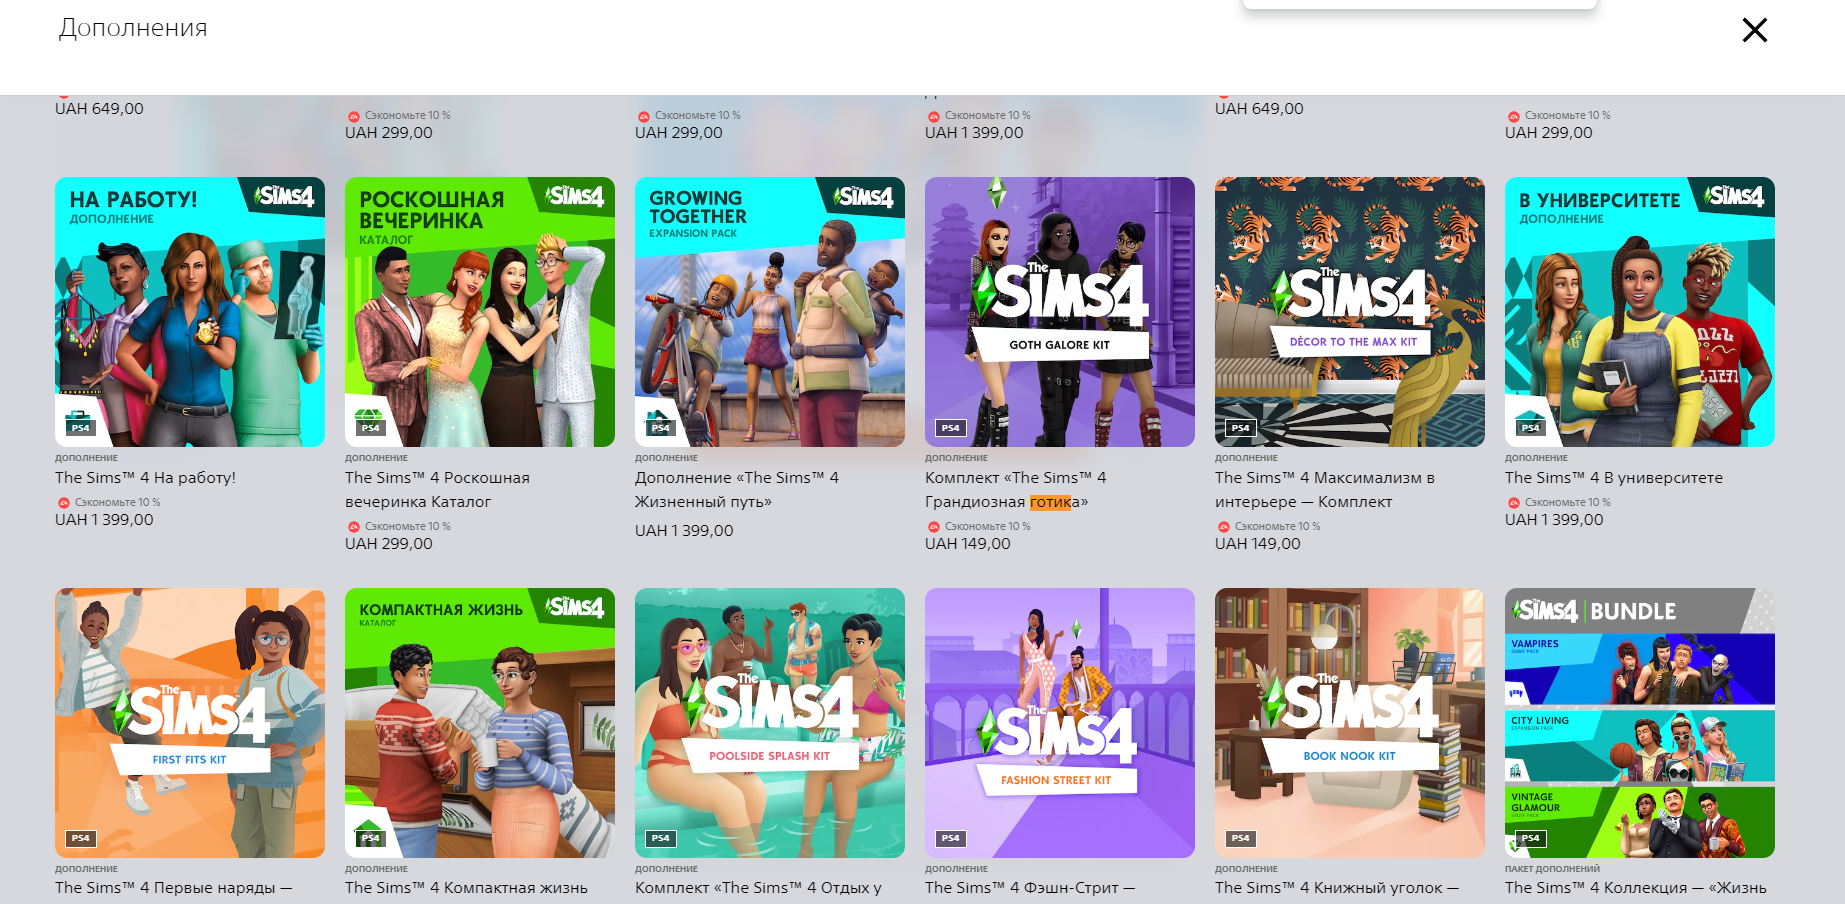 Комплект «The Sims 4 Грандиозная готика» для PS